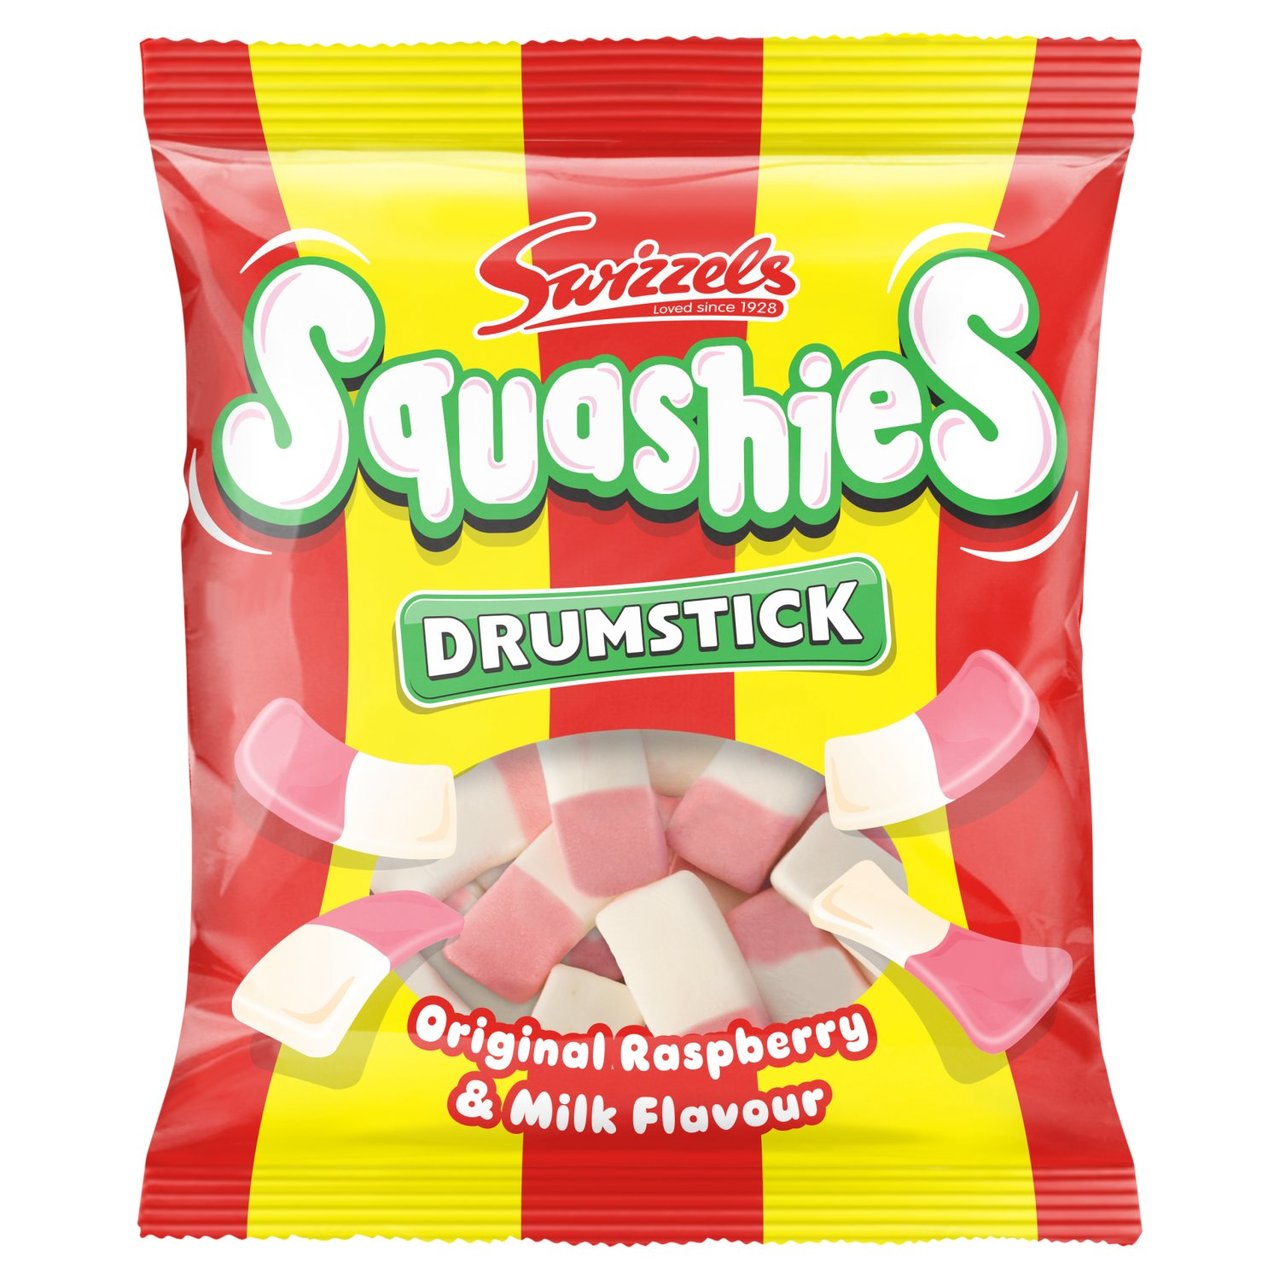 Swizzles Drumstick Squashies Original Flavour 140g*